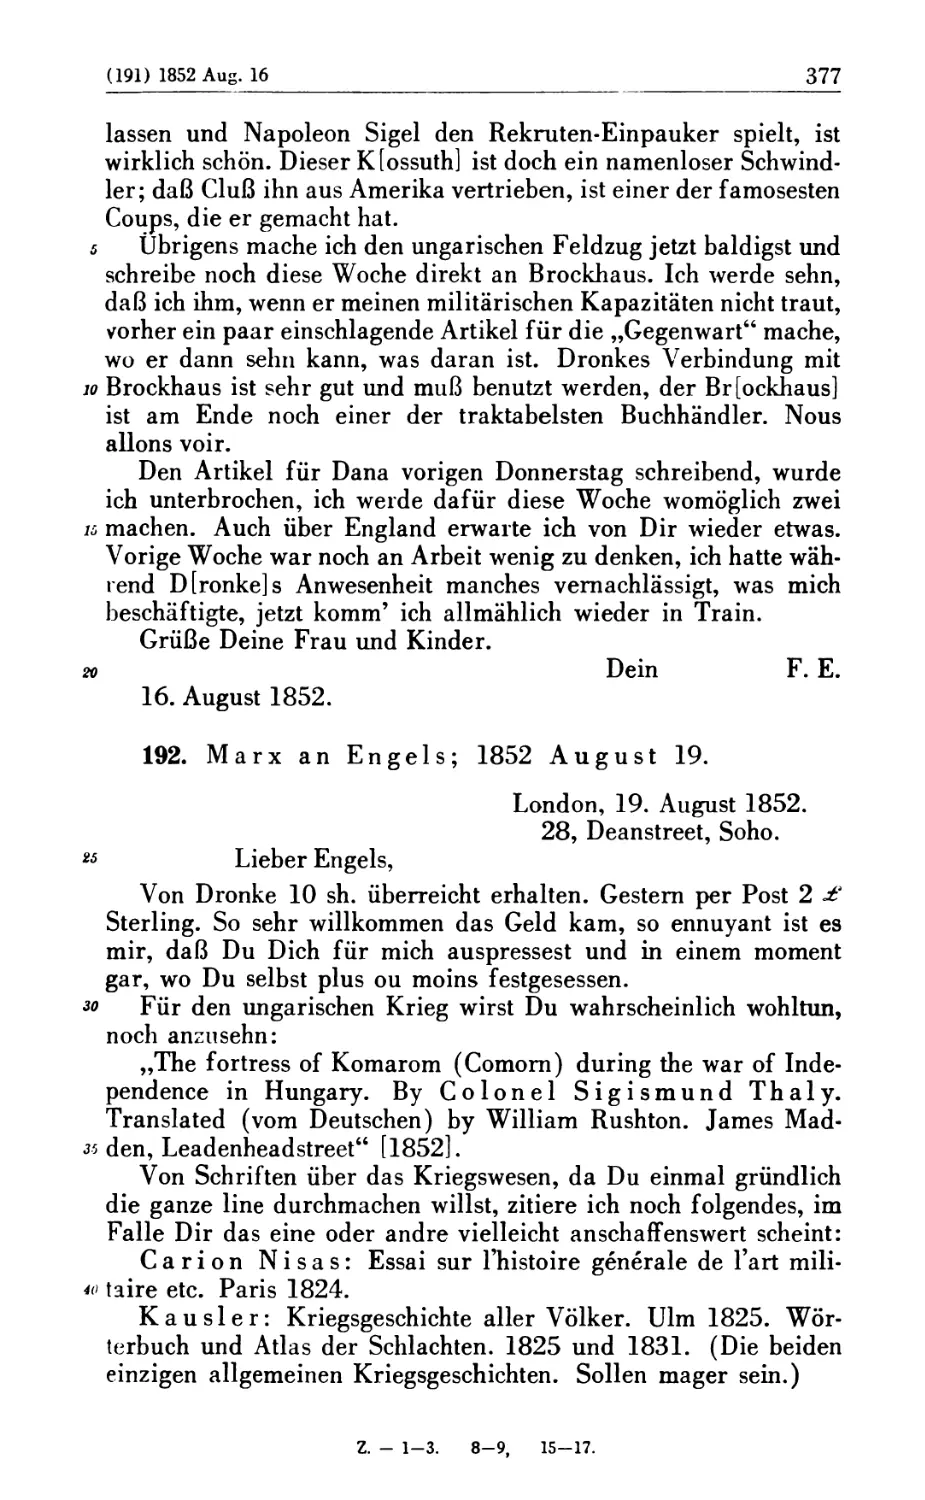 192. Marx an Engels; 1852 August 19